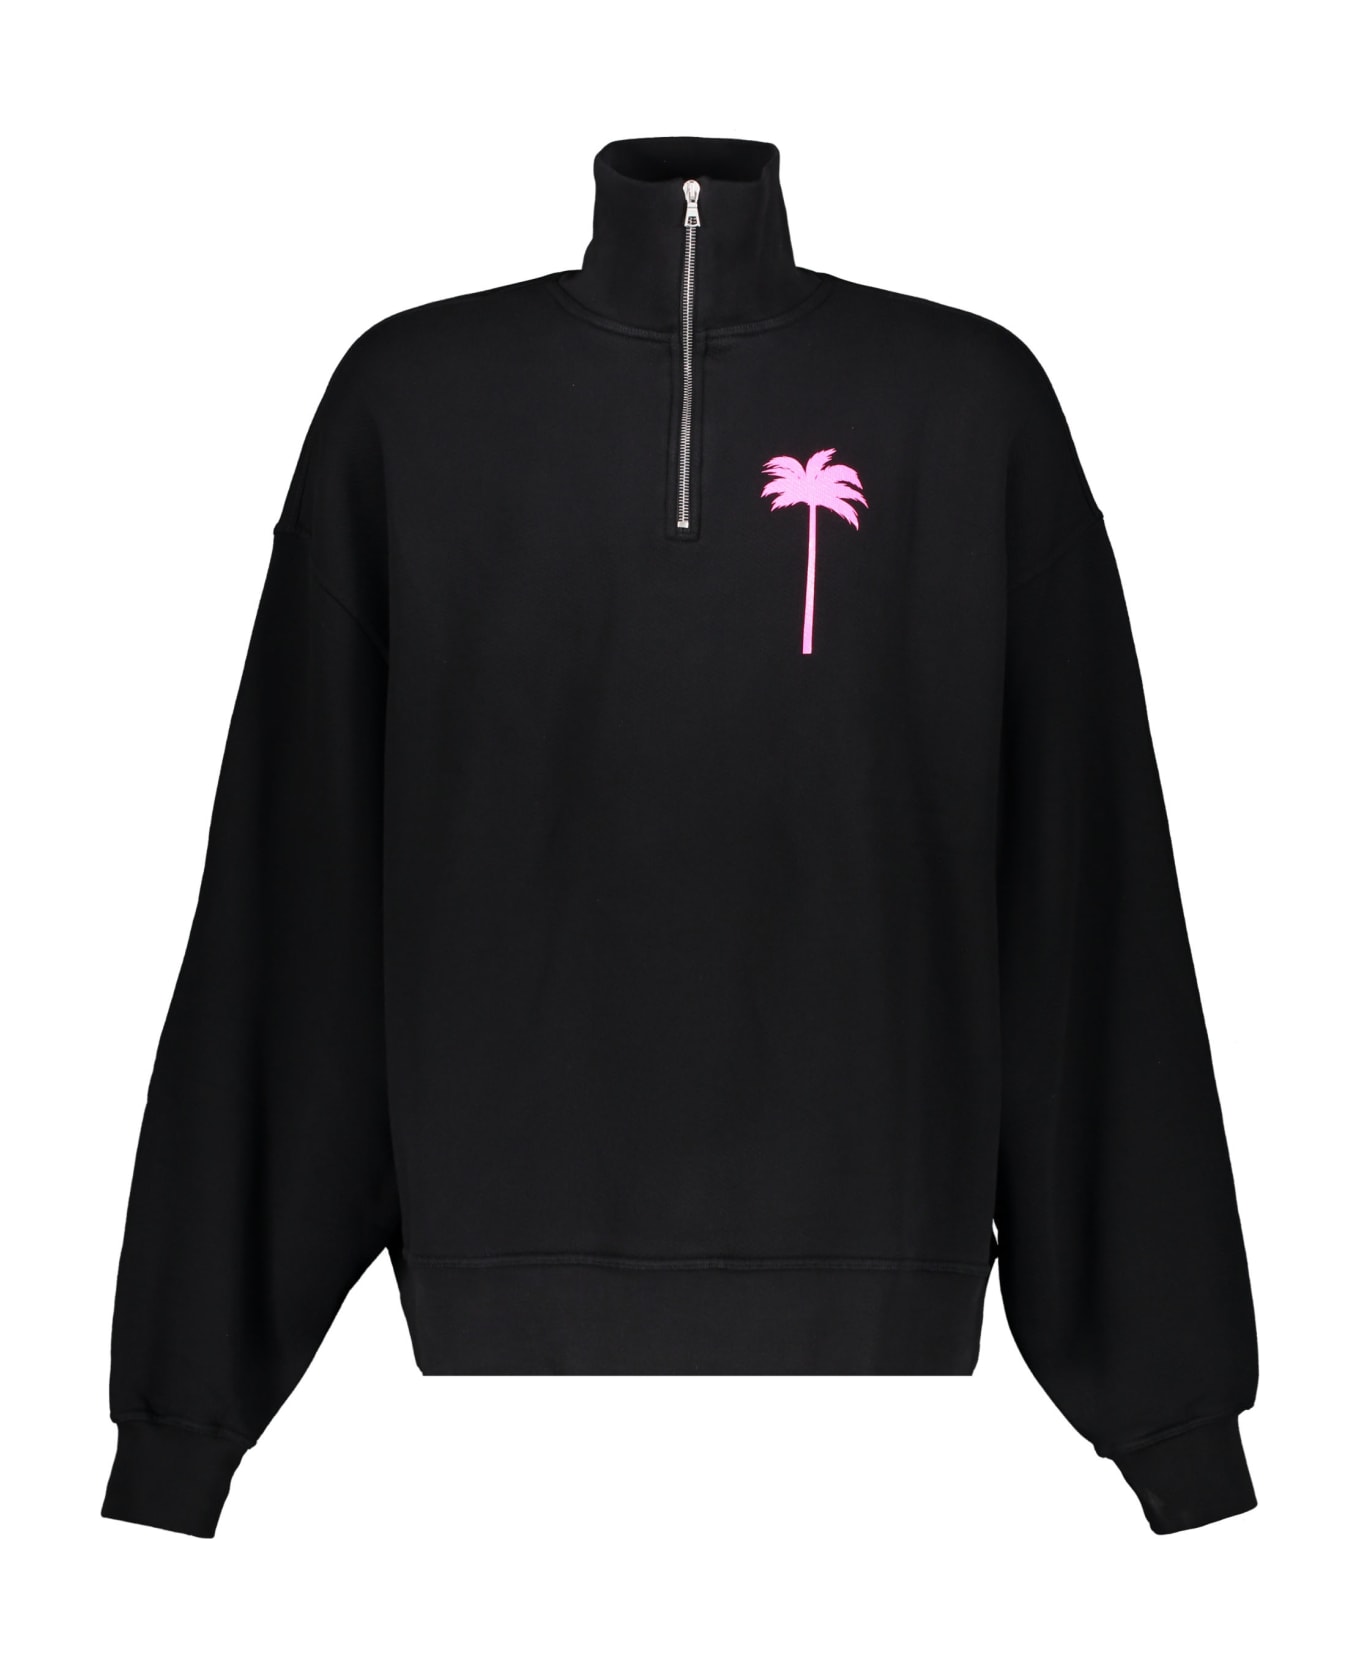 Palm Angels Printed Cotton Sweatshirt - black